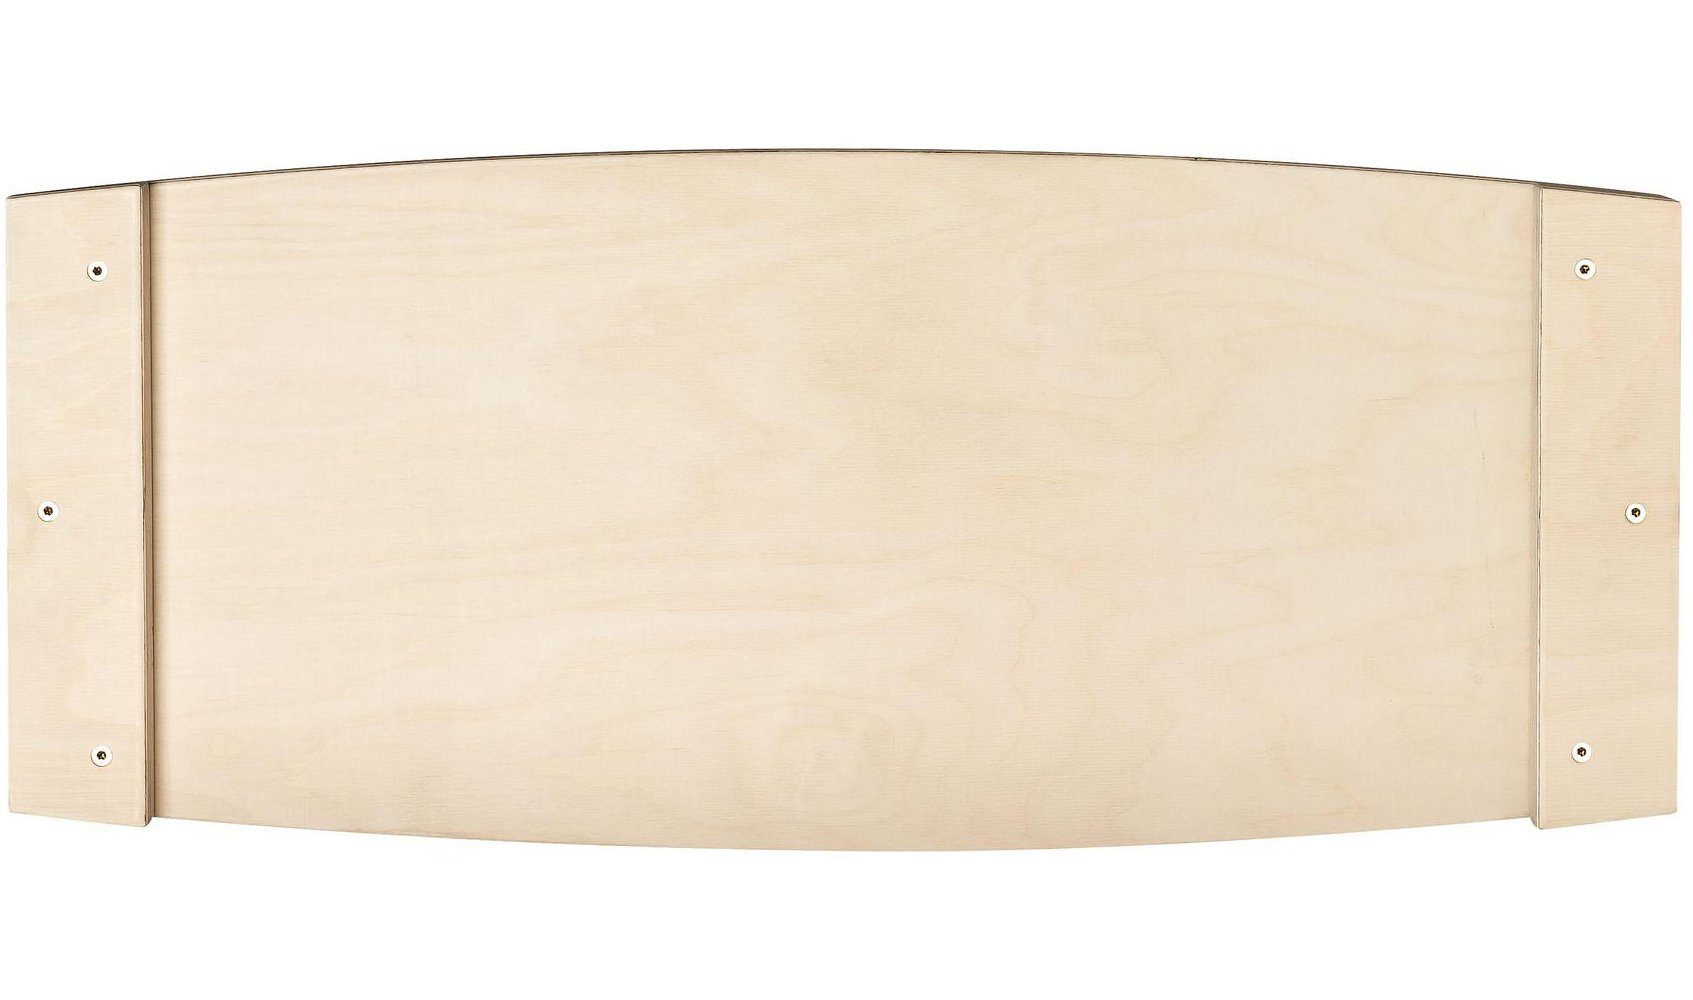 Korkrolle & Kork-Deko.de mit Rutschschutz Korkpads (45x10cm) Balanceboard als Birkenholz aus